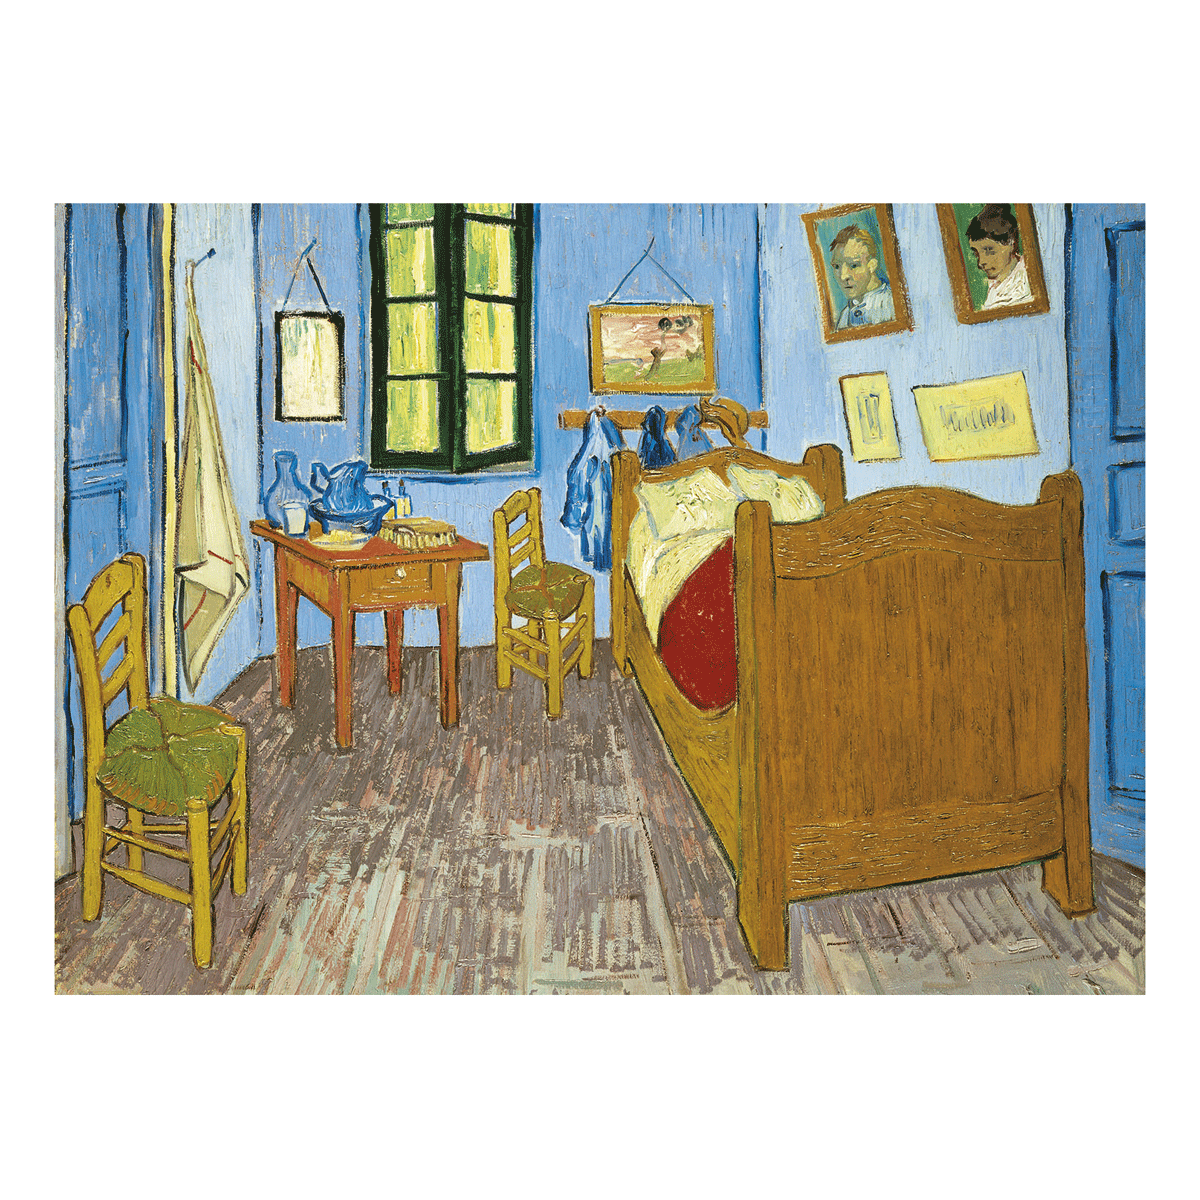 Clementoni puzzle museum collection - van gogh, "bedroom in arles" - 1000 pezzi, puzzle adulti - CLEMENTONI